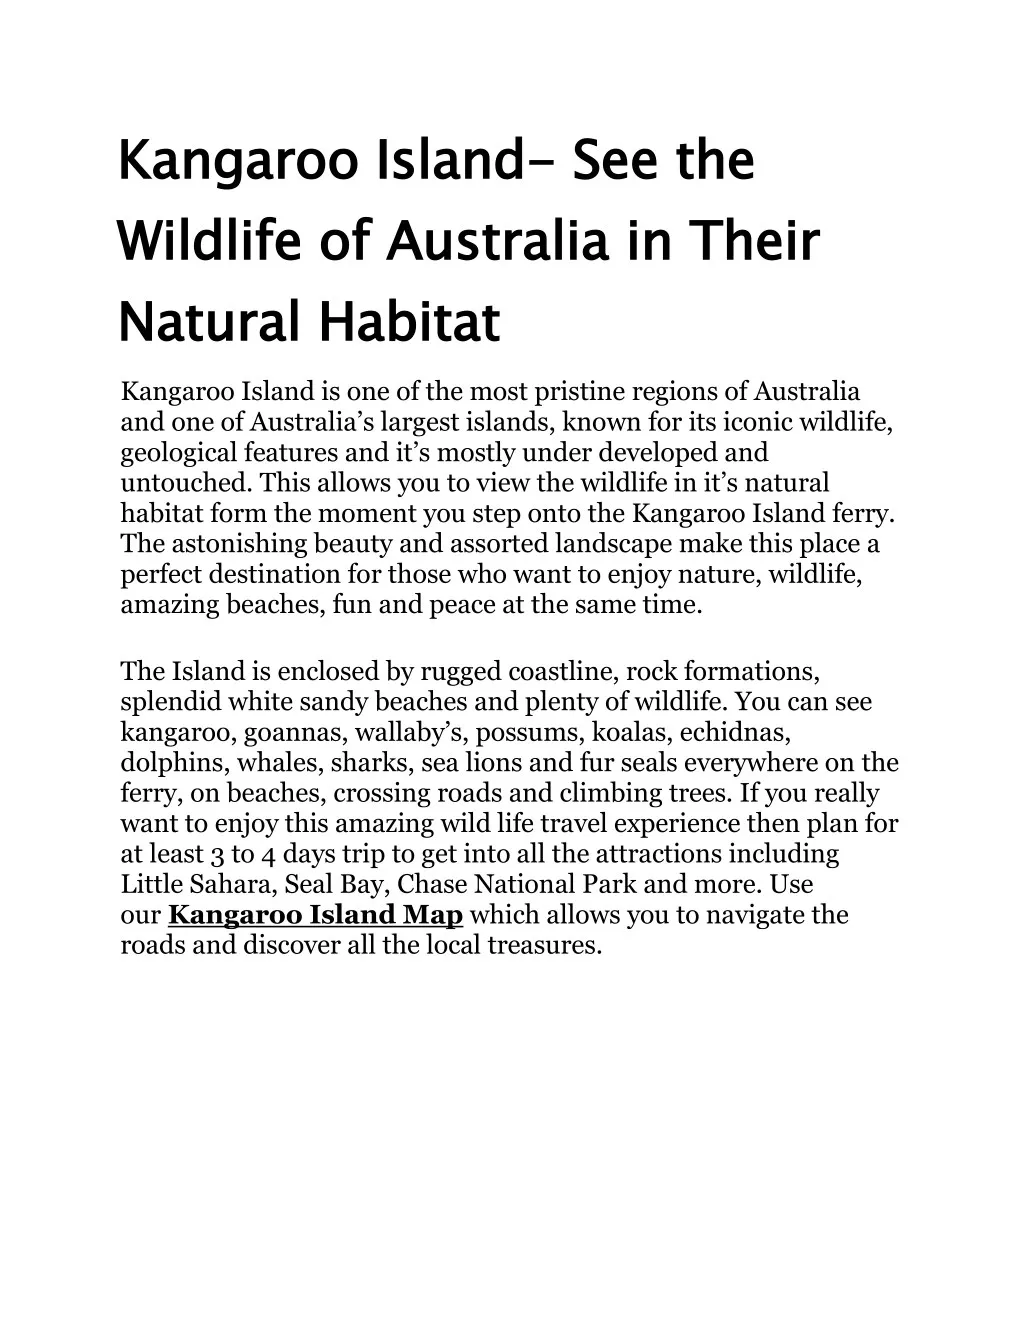 kangaroo island wildlife of australia in their